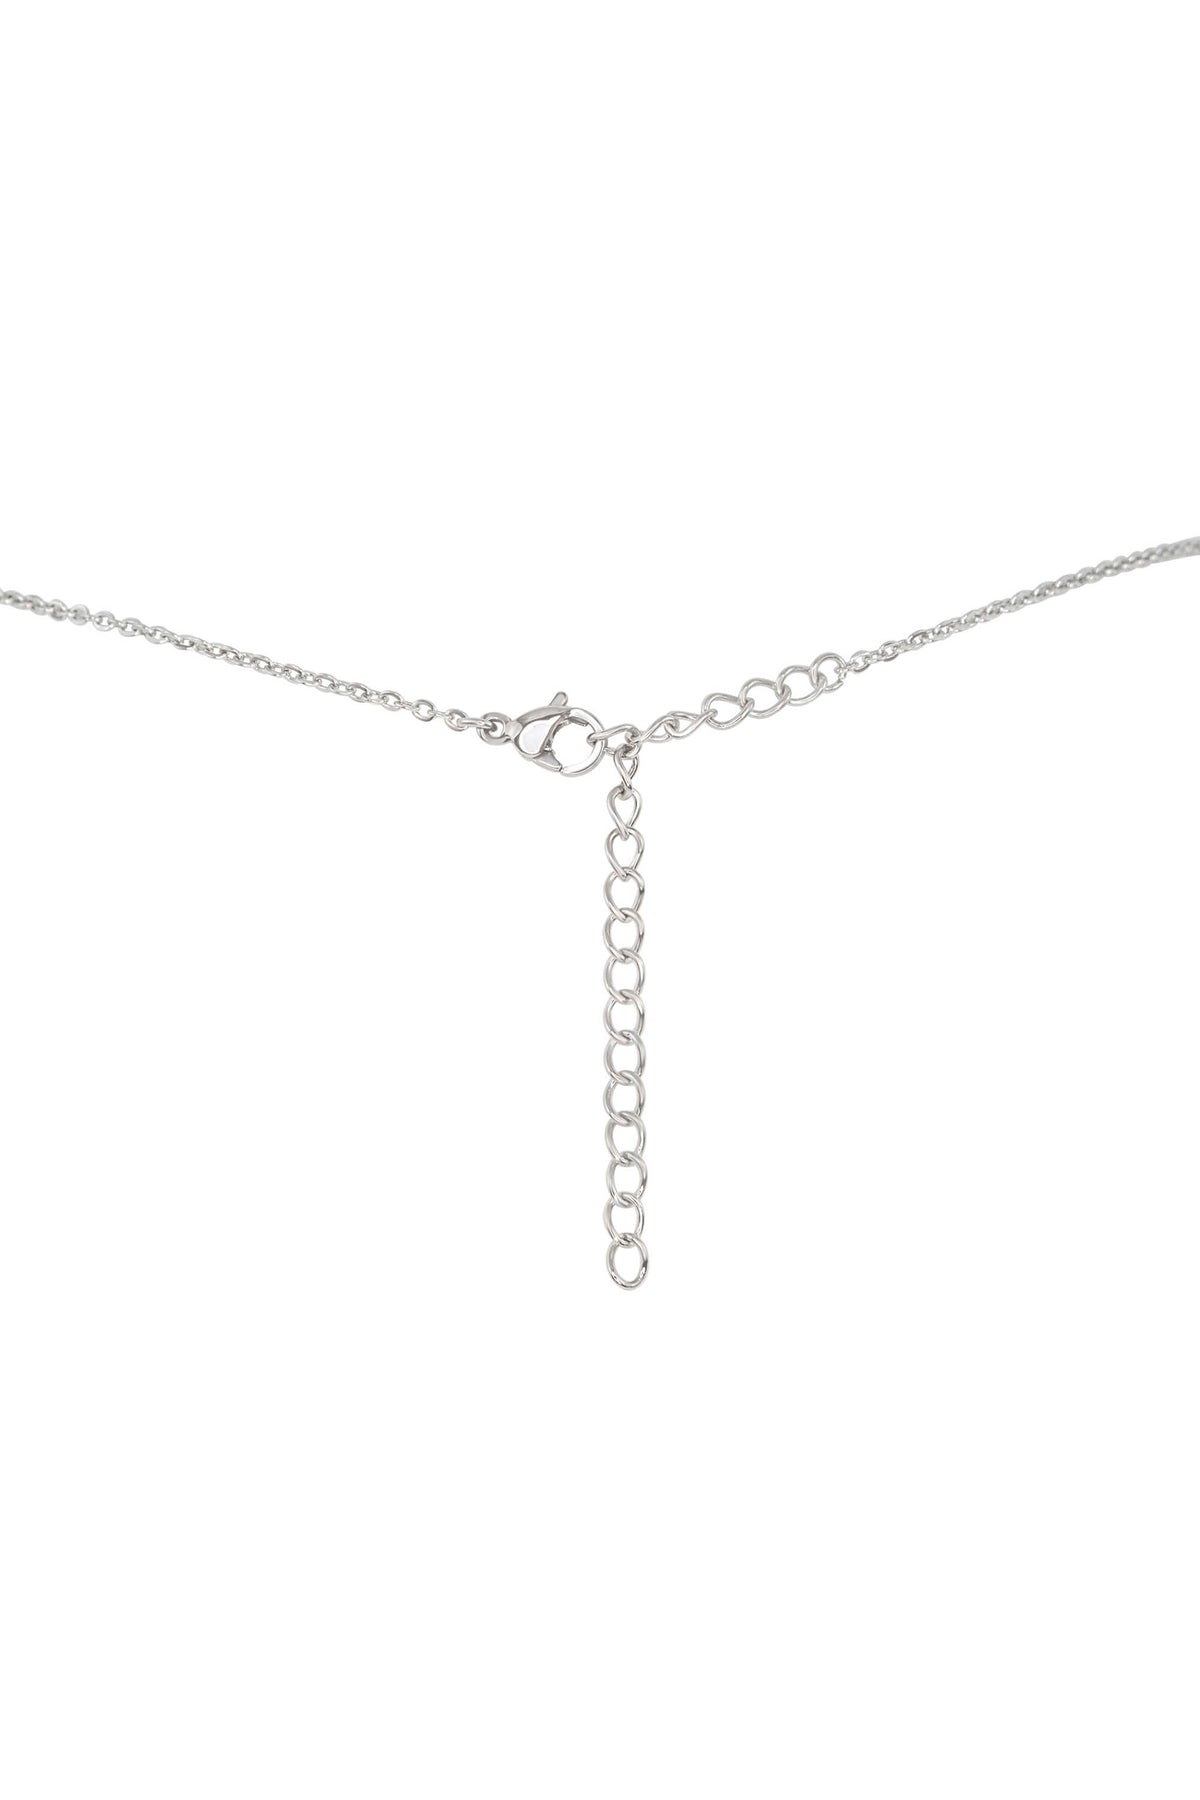 Raw Crystal Pendant Choker - Labradorite - Stainless Steel - Luna Tide Handmade Jewellery